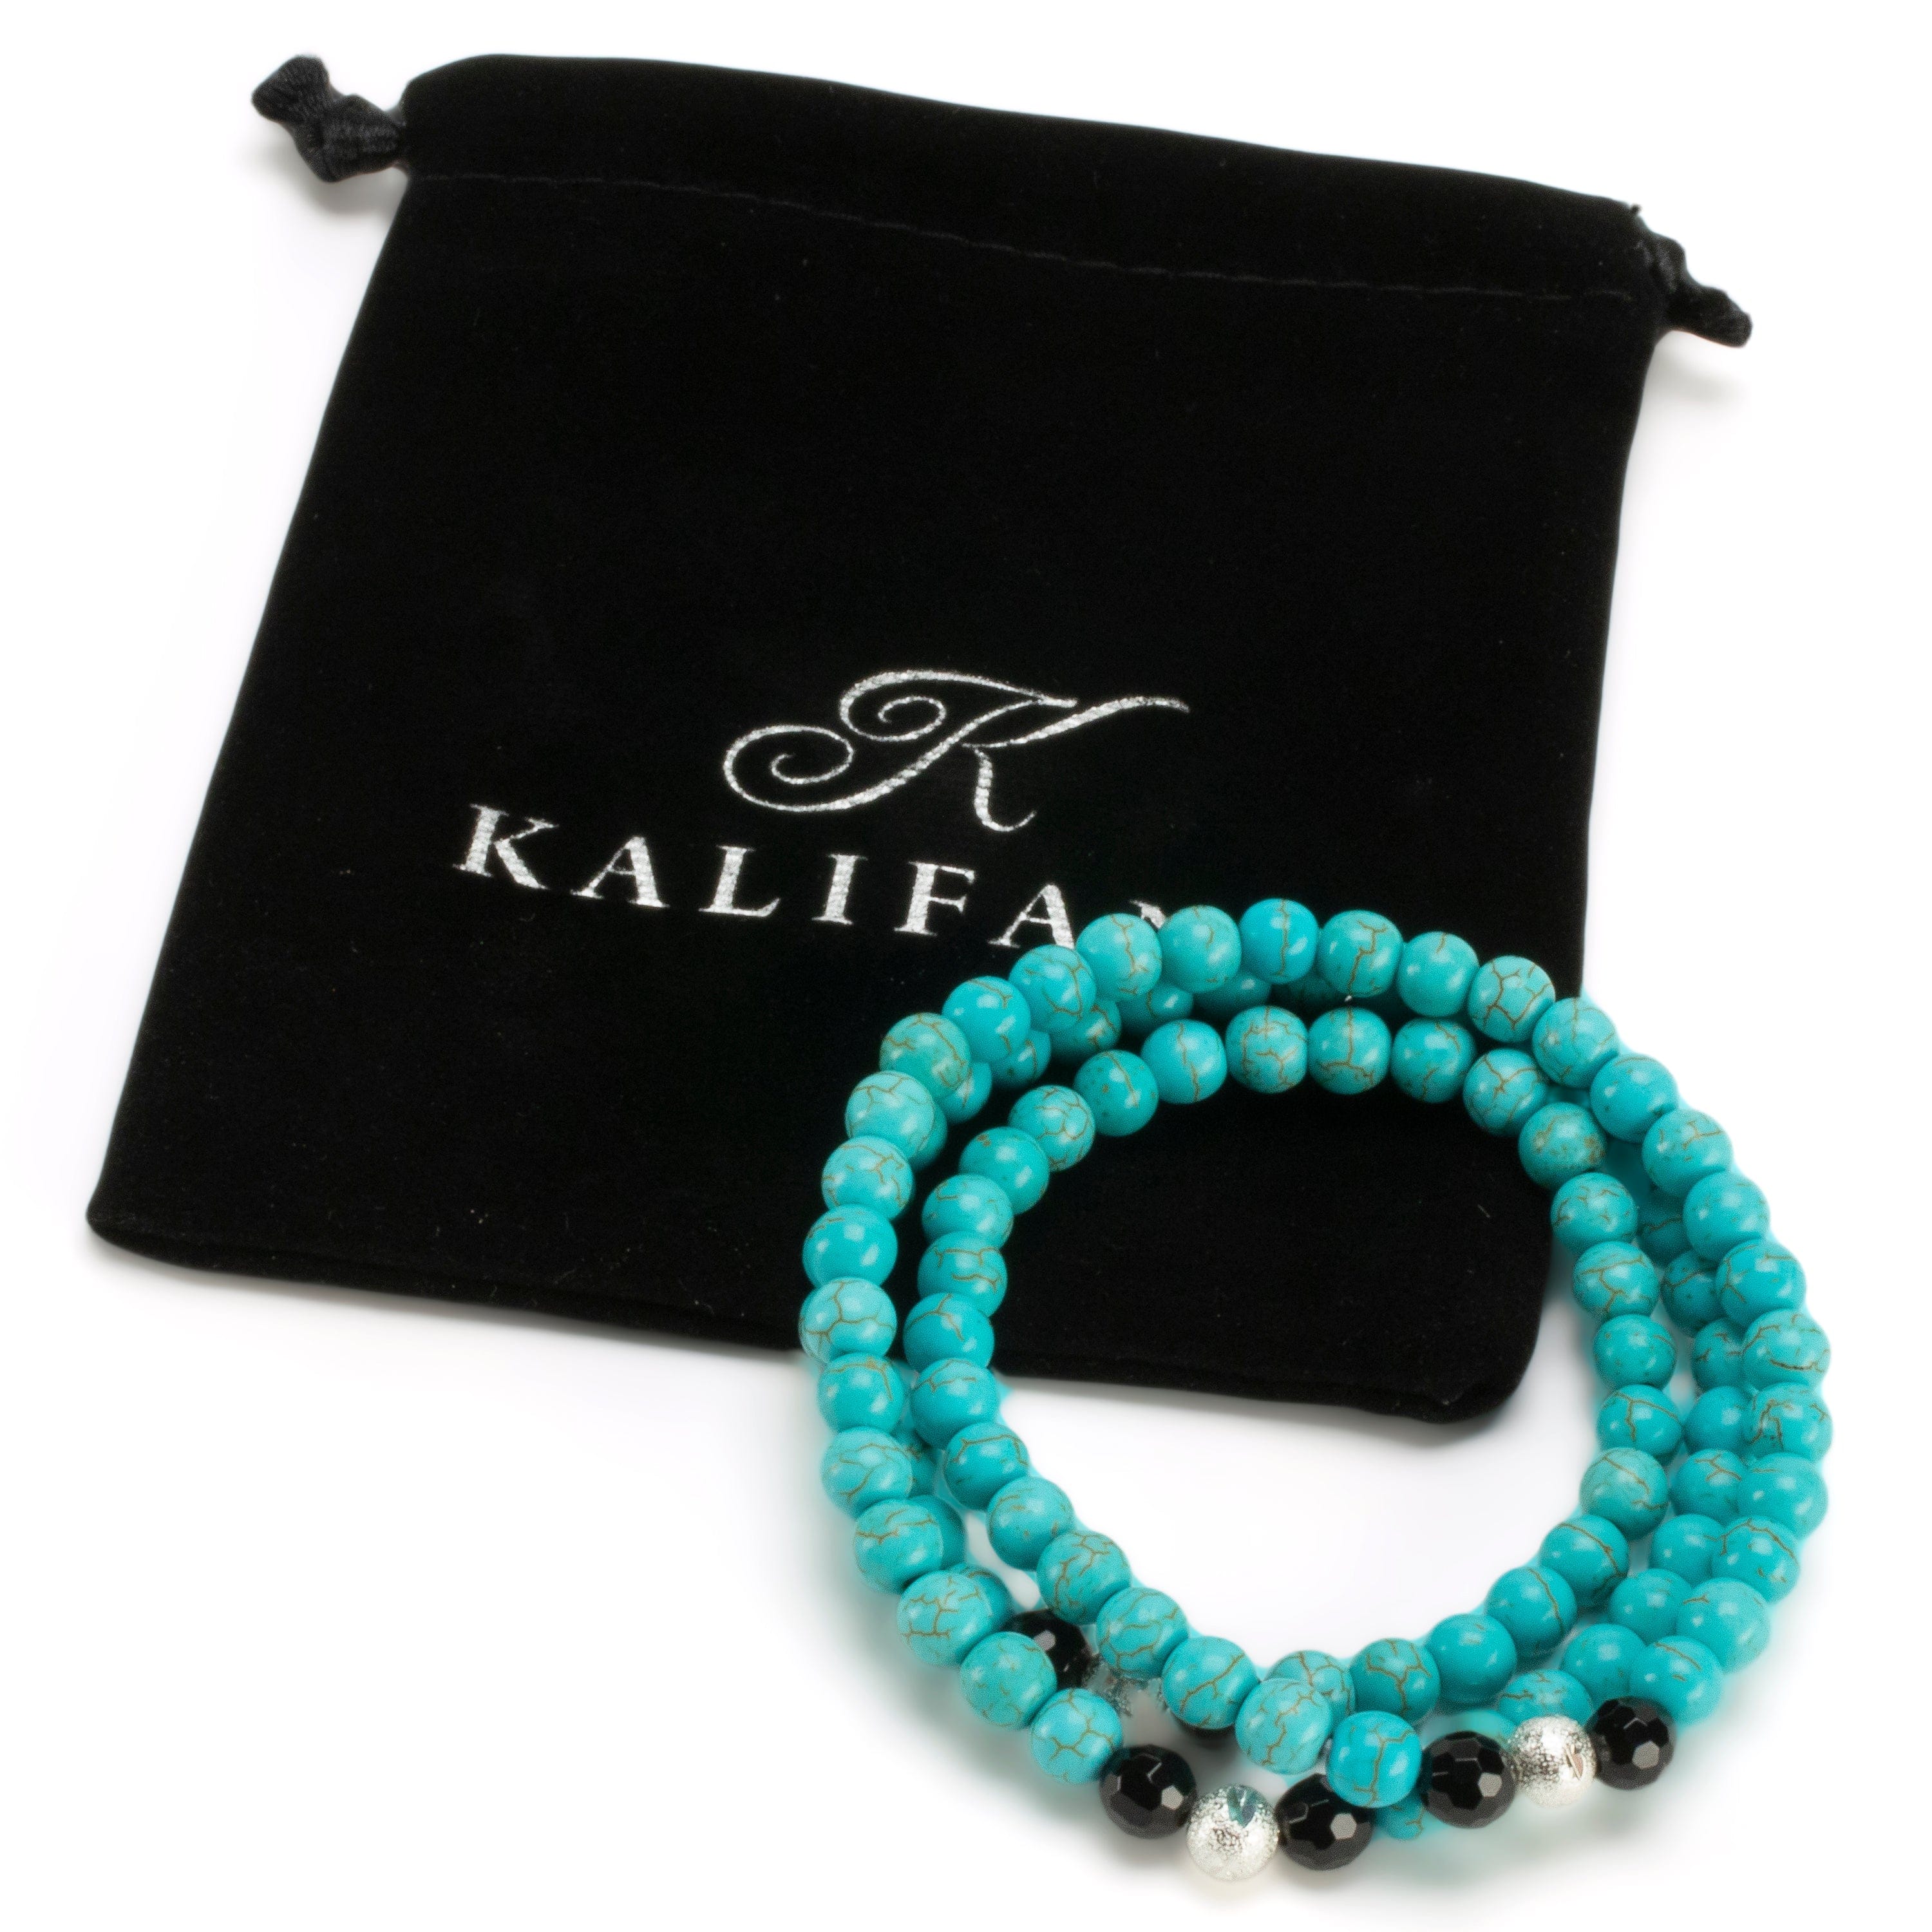 Kalifano Gemstone Bracelets Howlite Turquoise 6mm Beads with Black Agate & Silver Sparkly Accent Beads Triple Wrap Gemstone Elastic Bracelet WHITE-BGI3-085